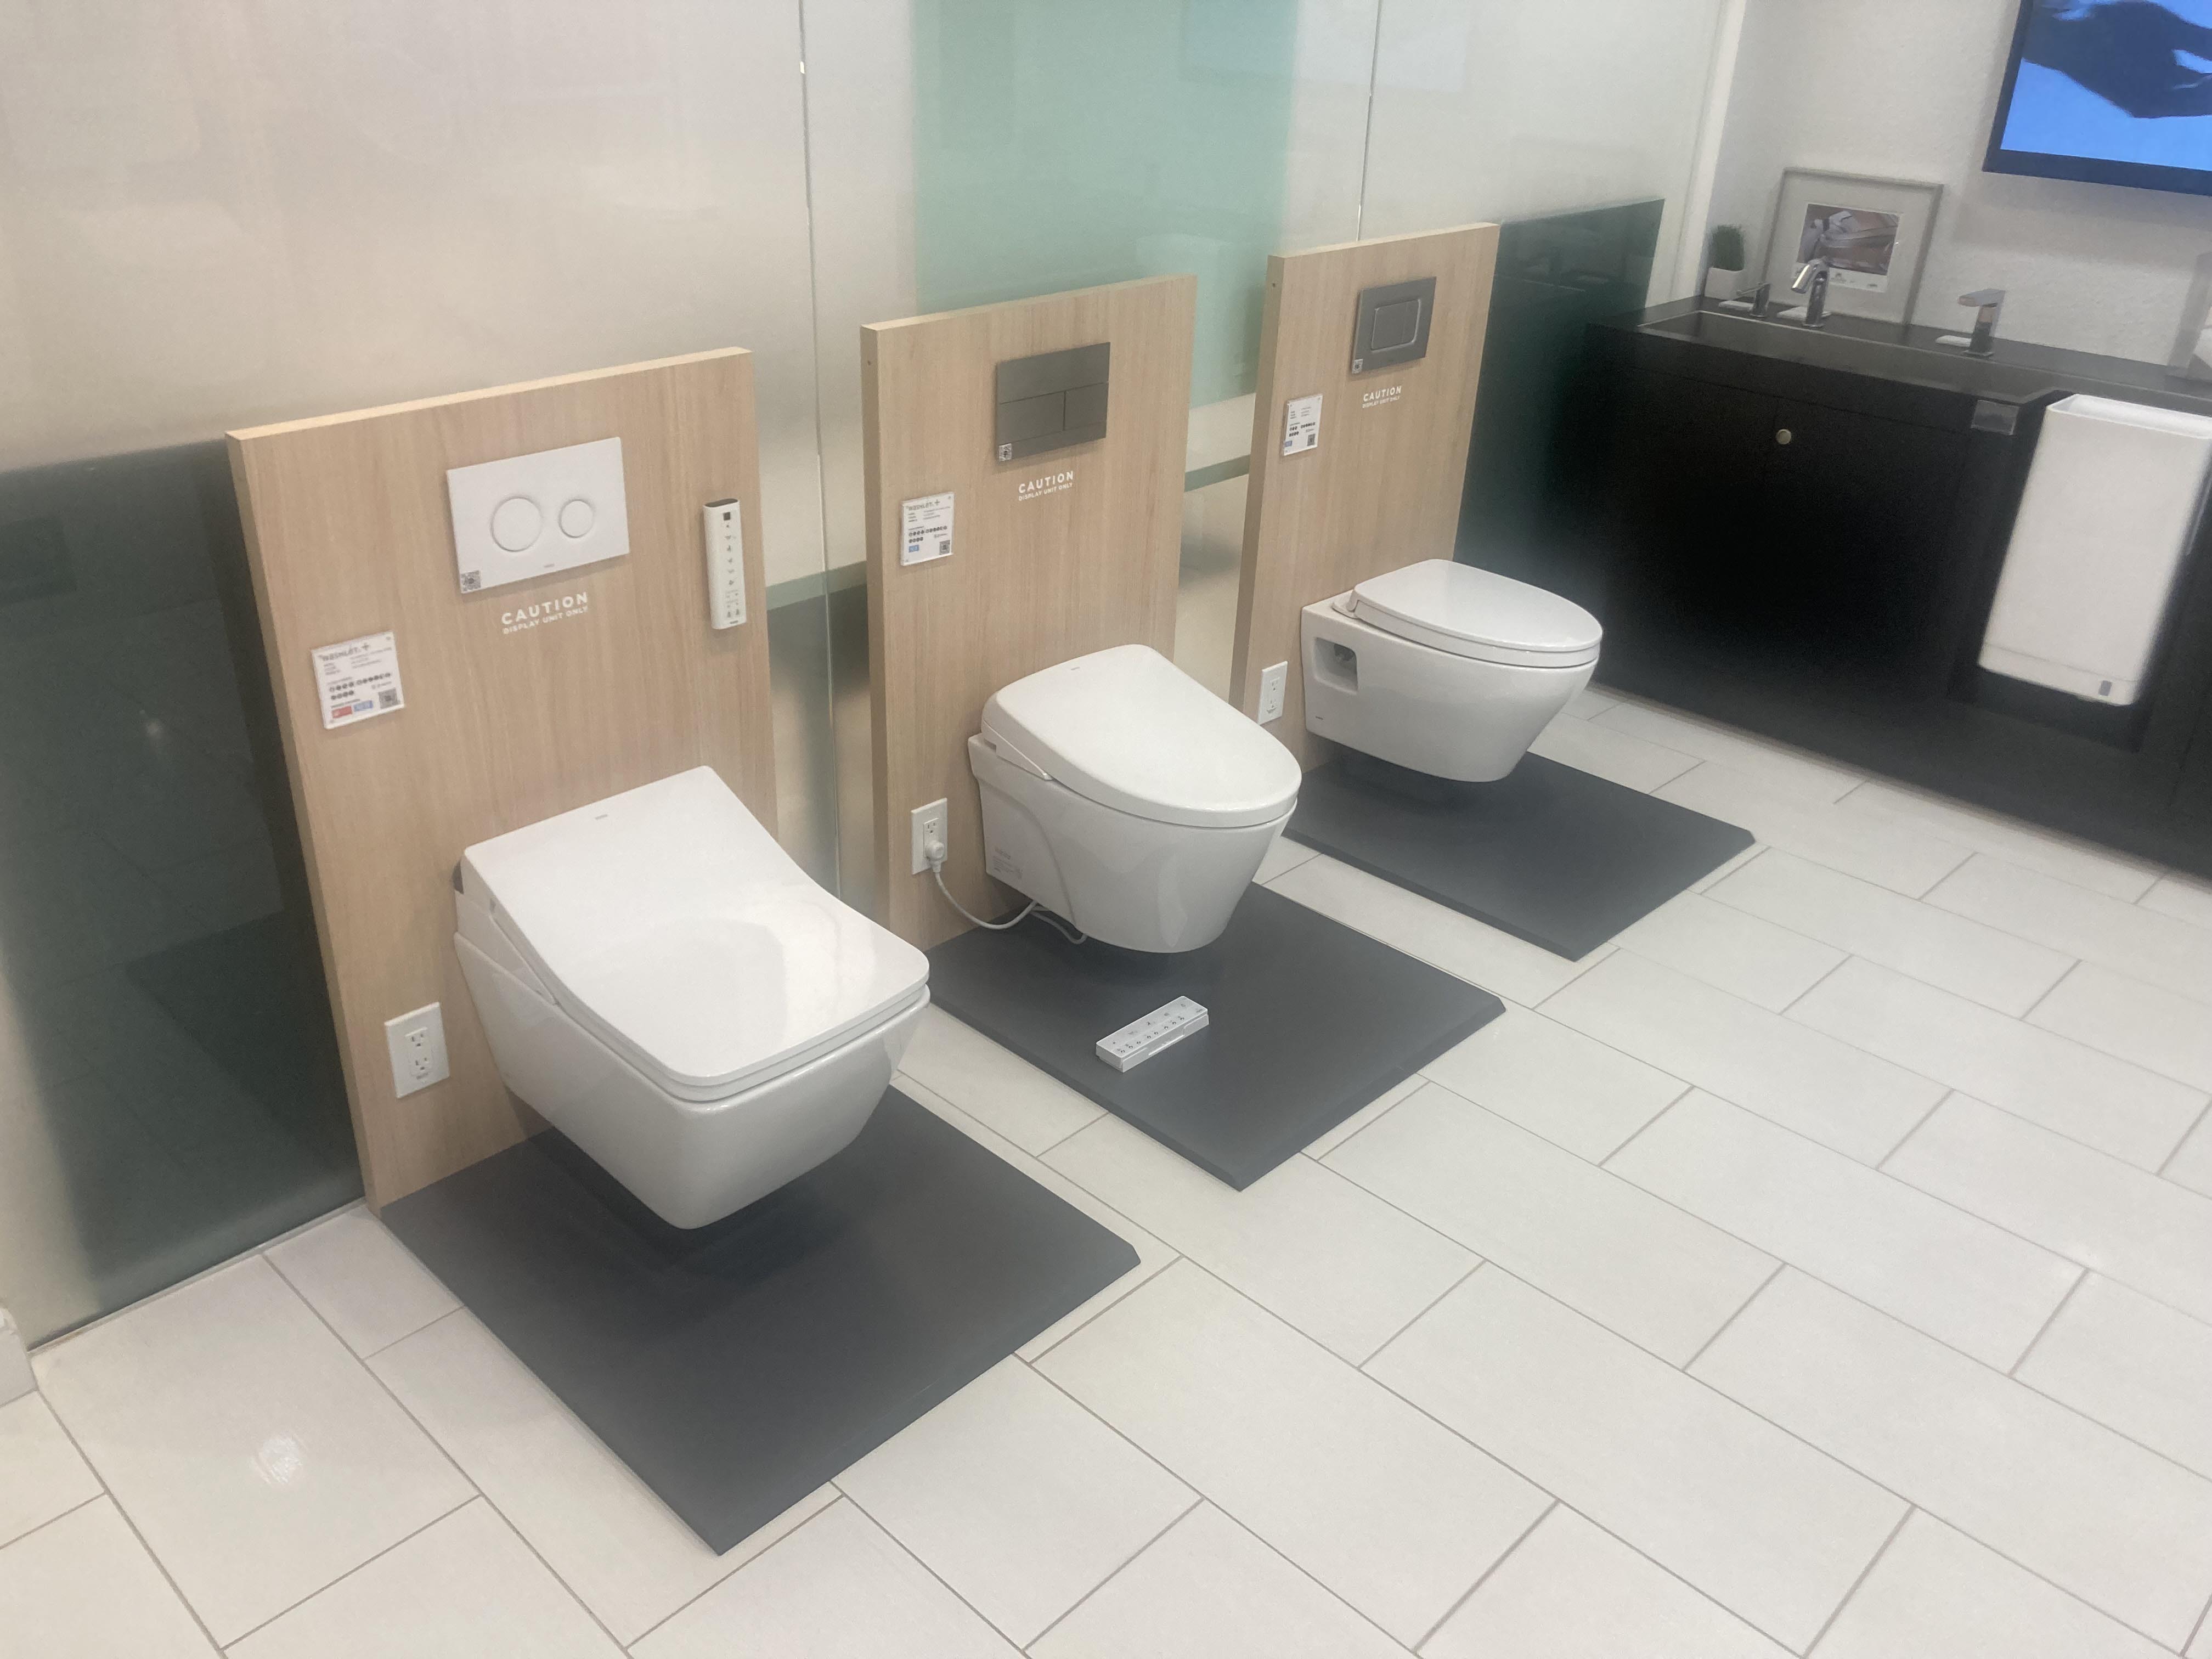 Wall-hung toilets on display